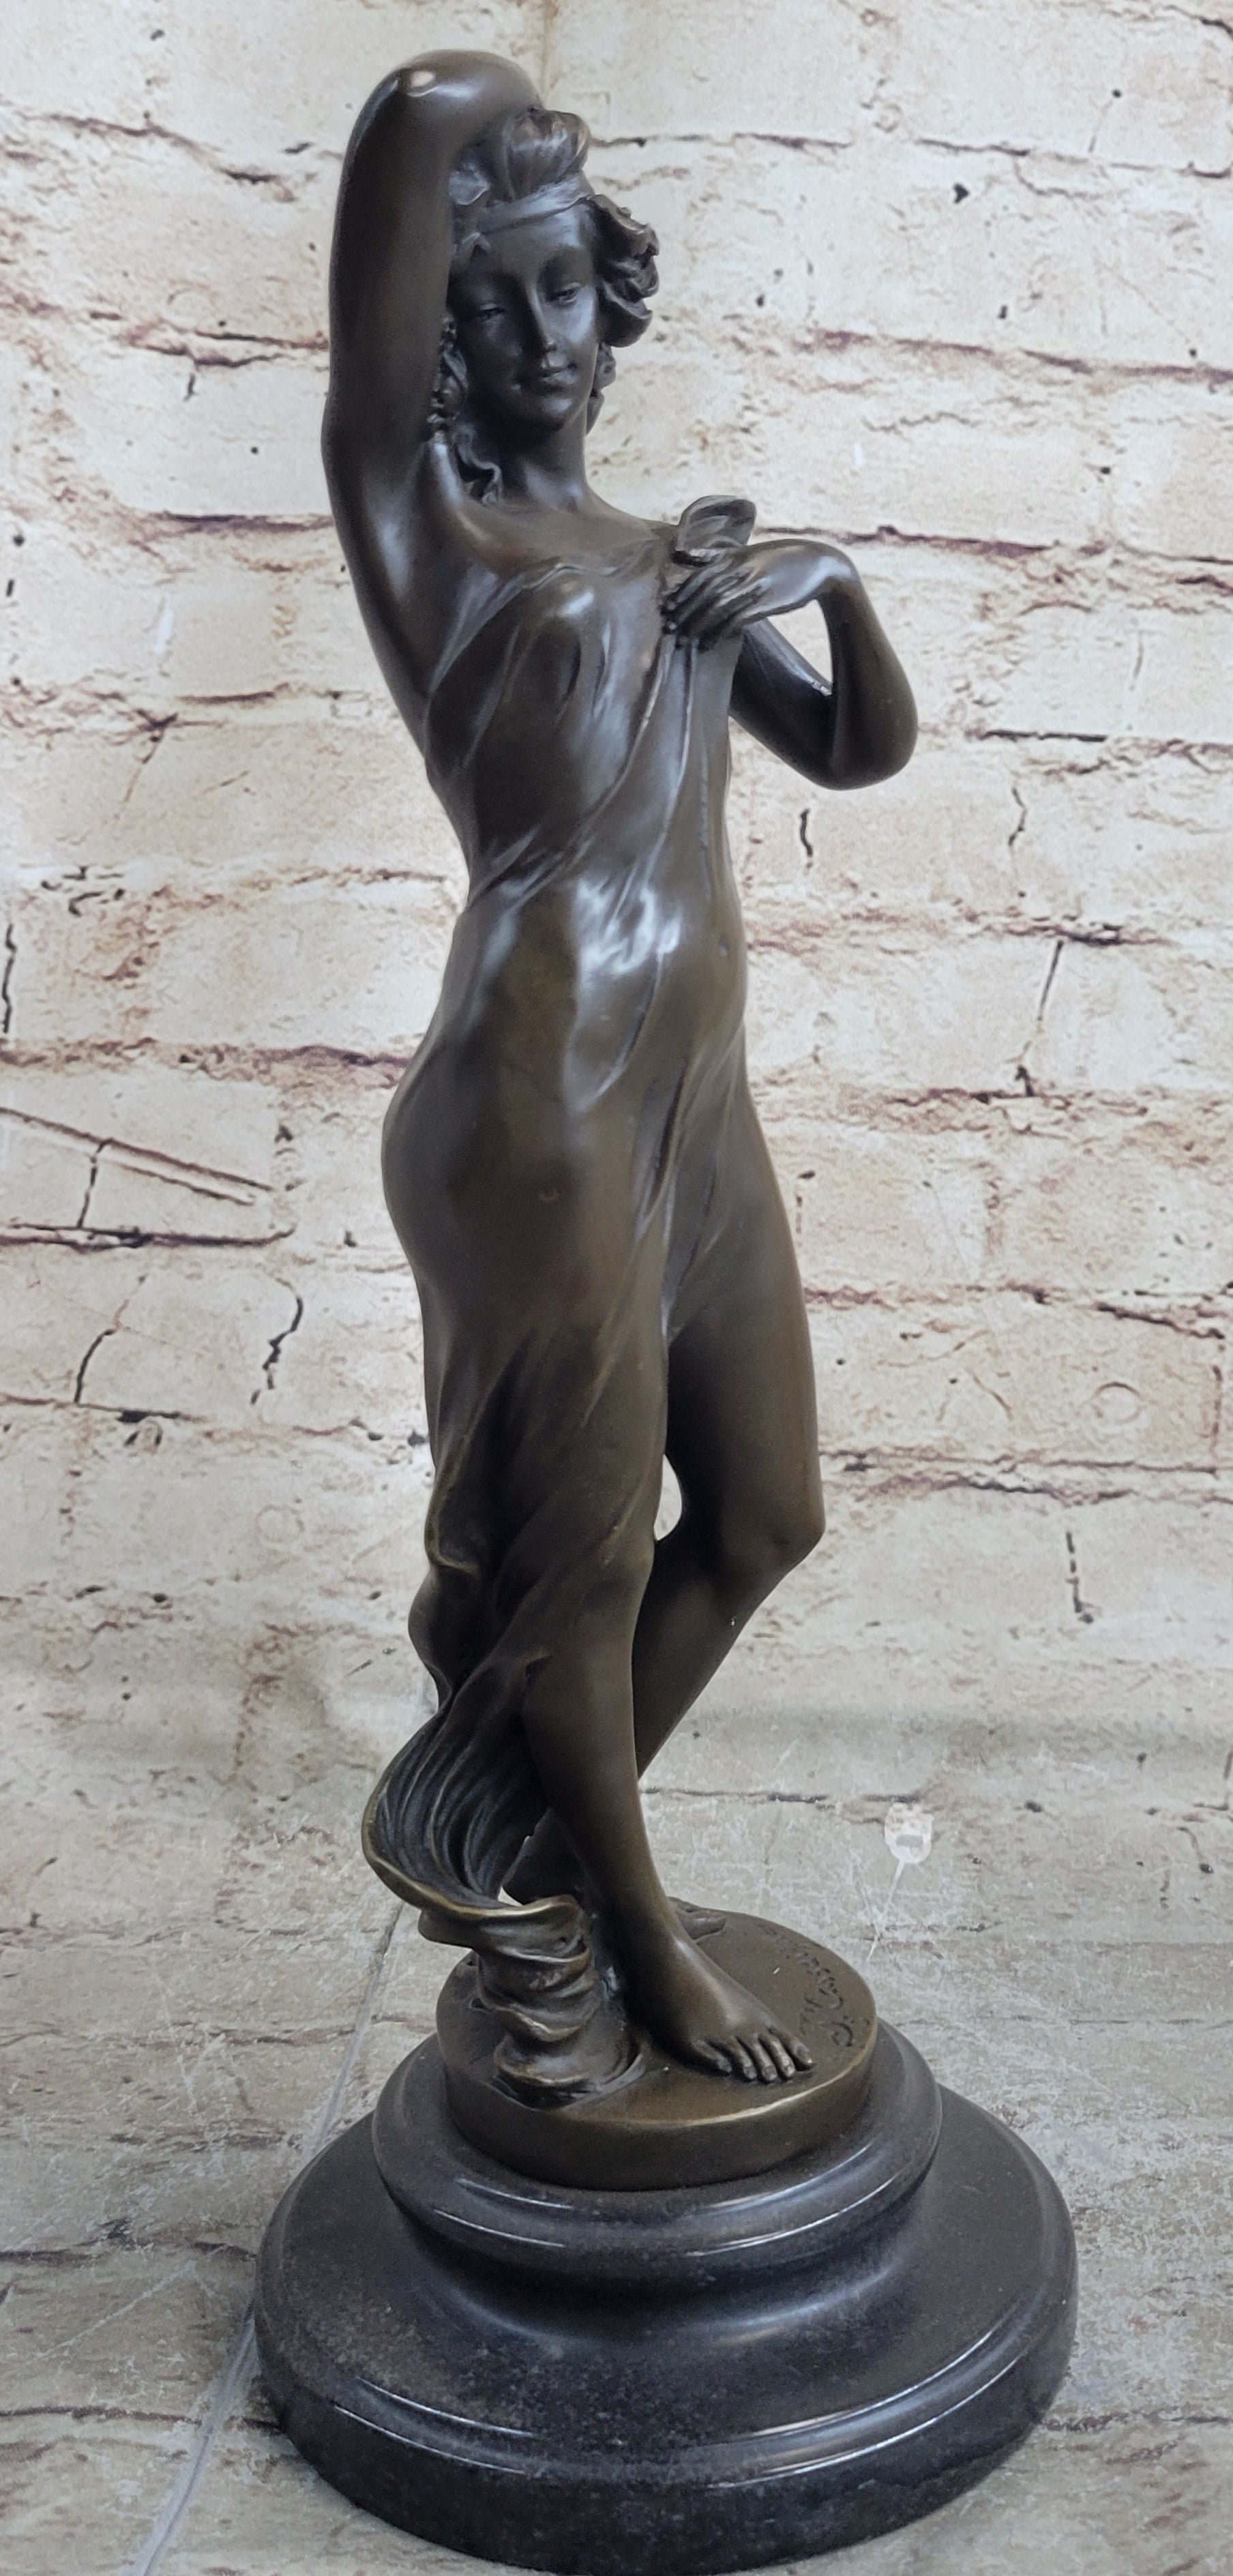 Western Bronze Marble Art Deco Sculpture Statue Sexy Nude Woman Girl Erotic